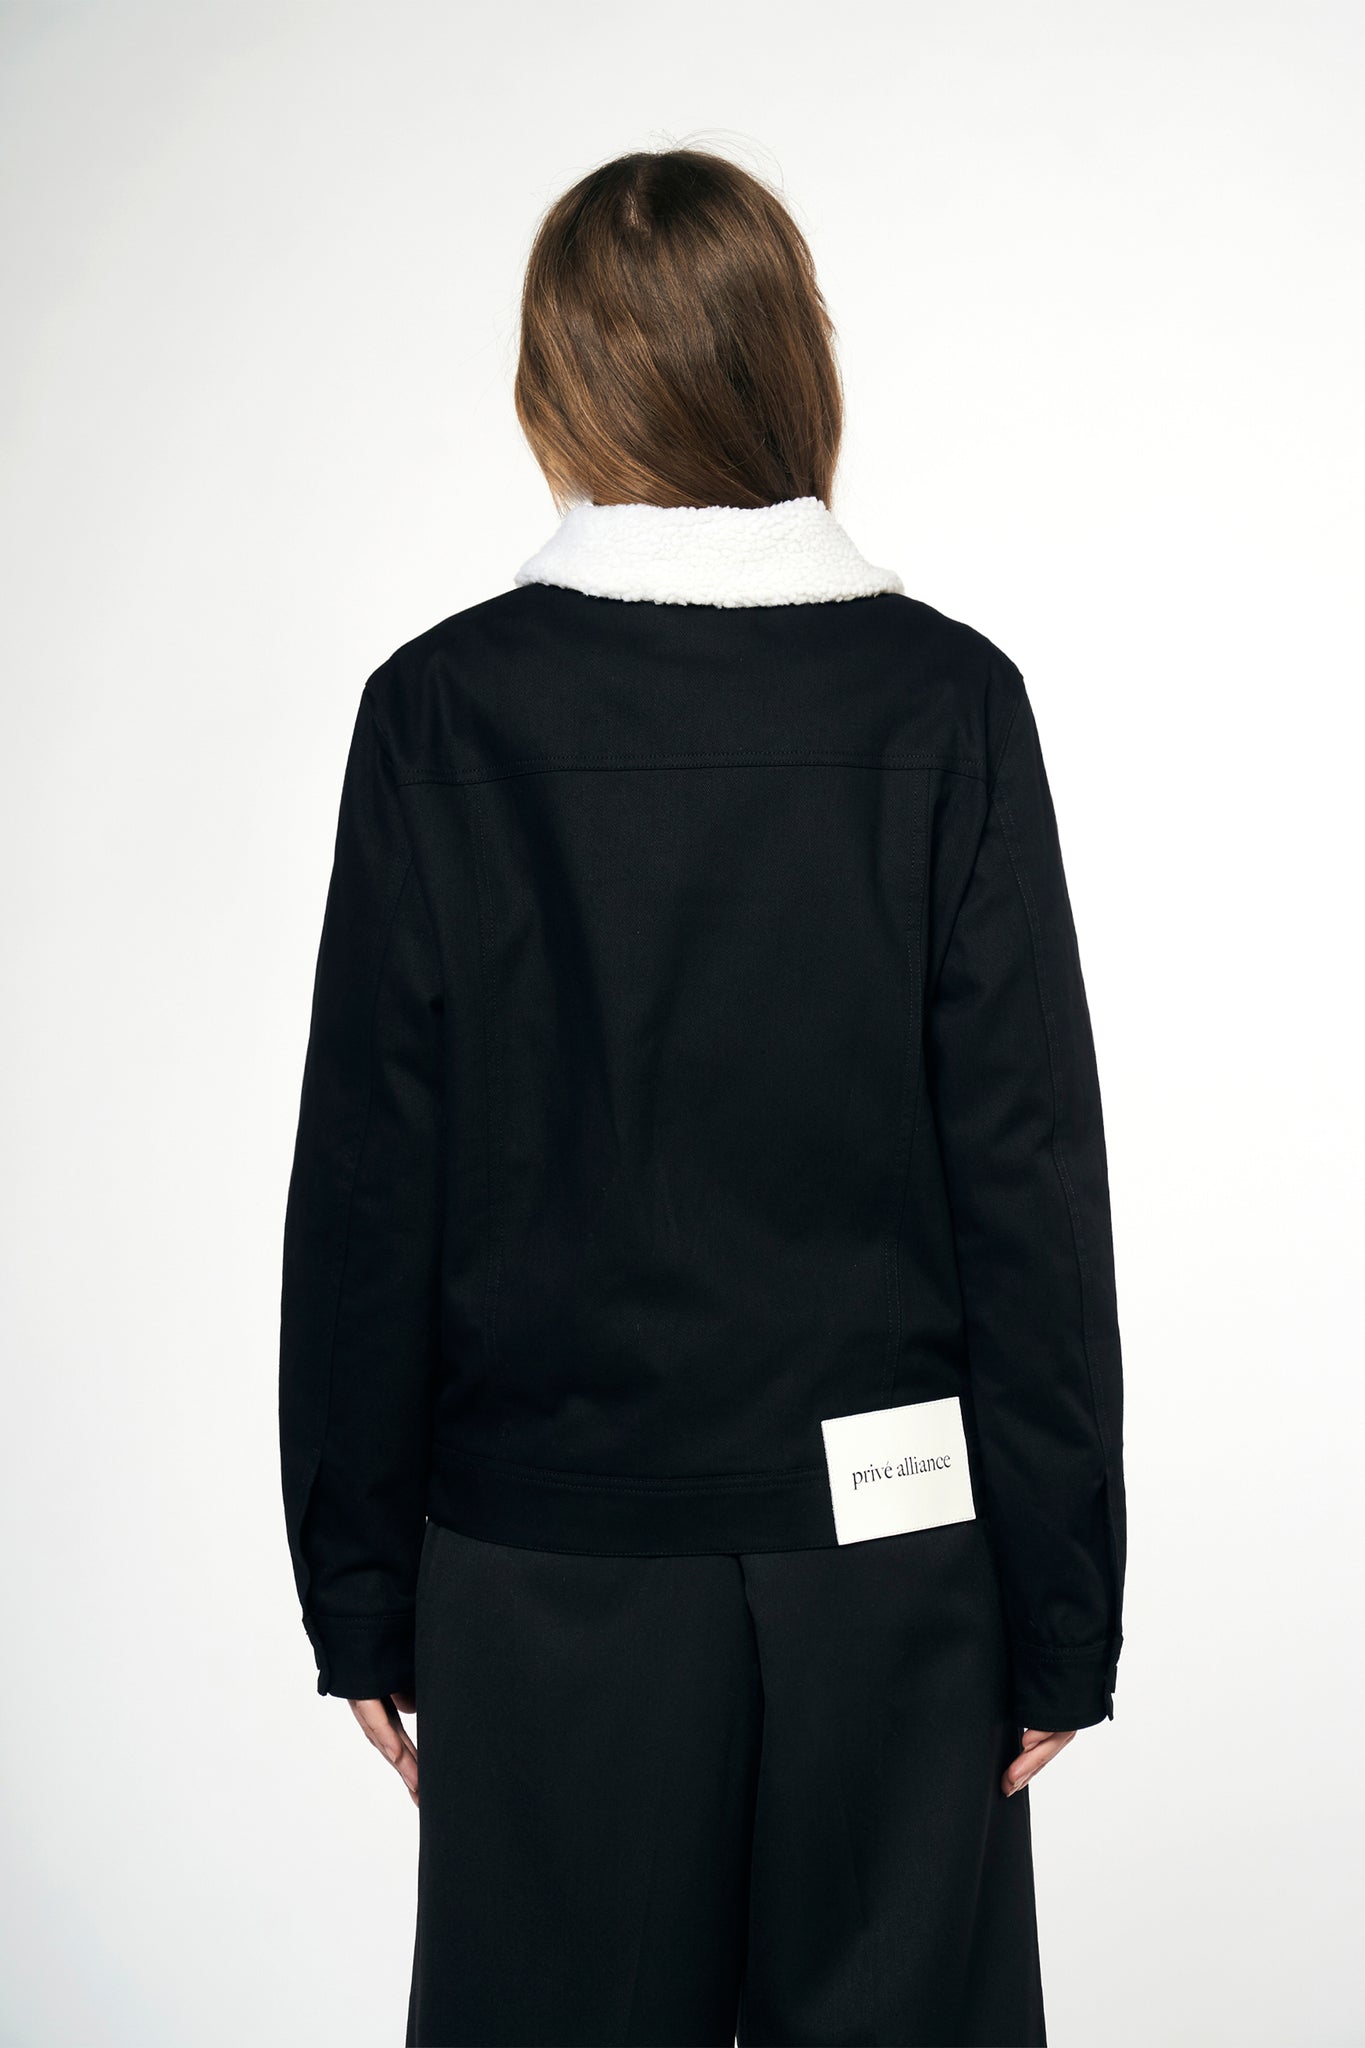 Prive Alliance Women's Composite Denim Jacket